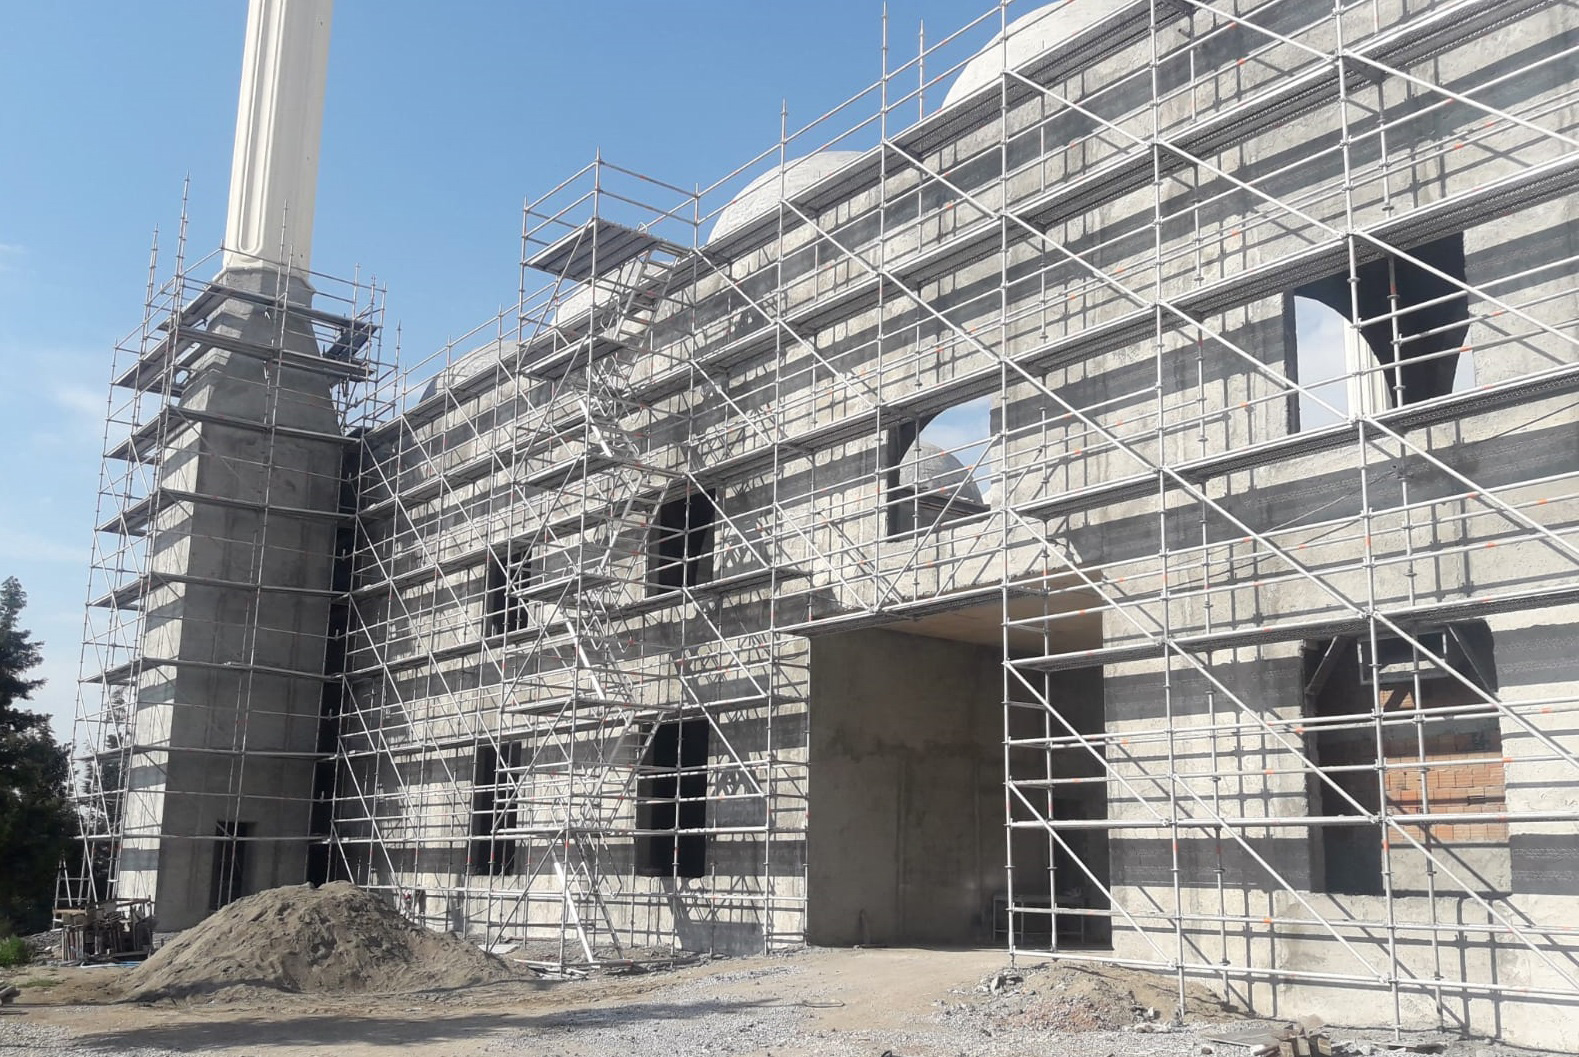 yagmur scaffolding building04 - CONSTRUCTION